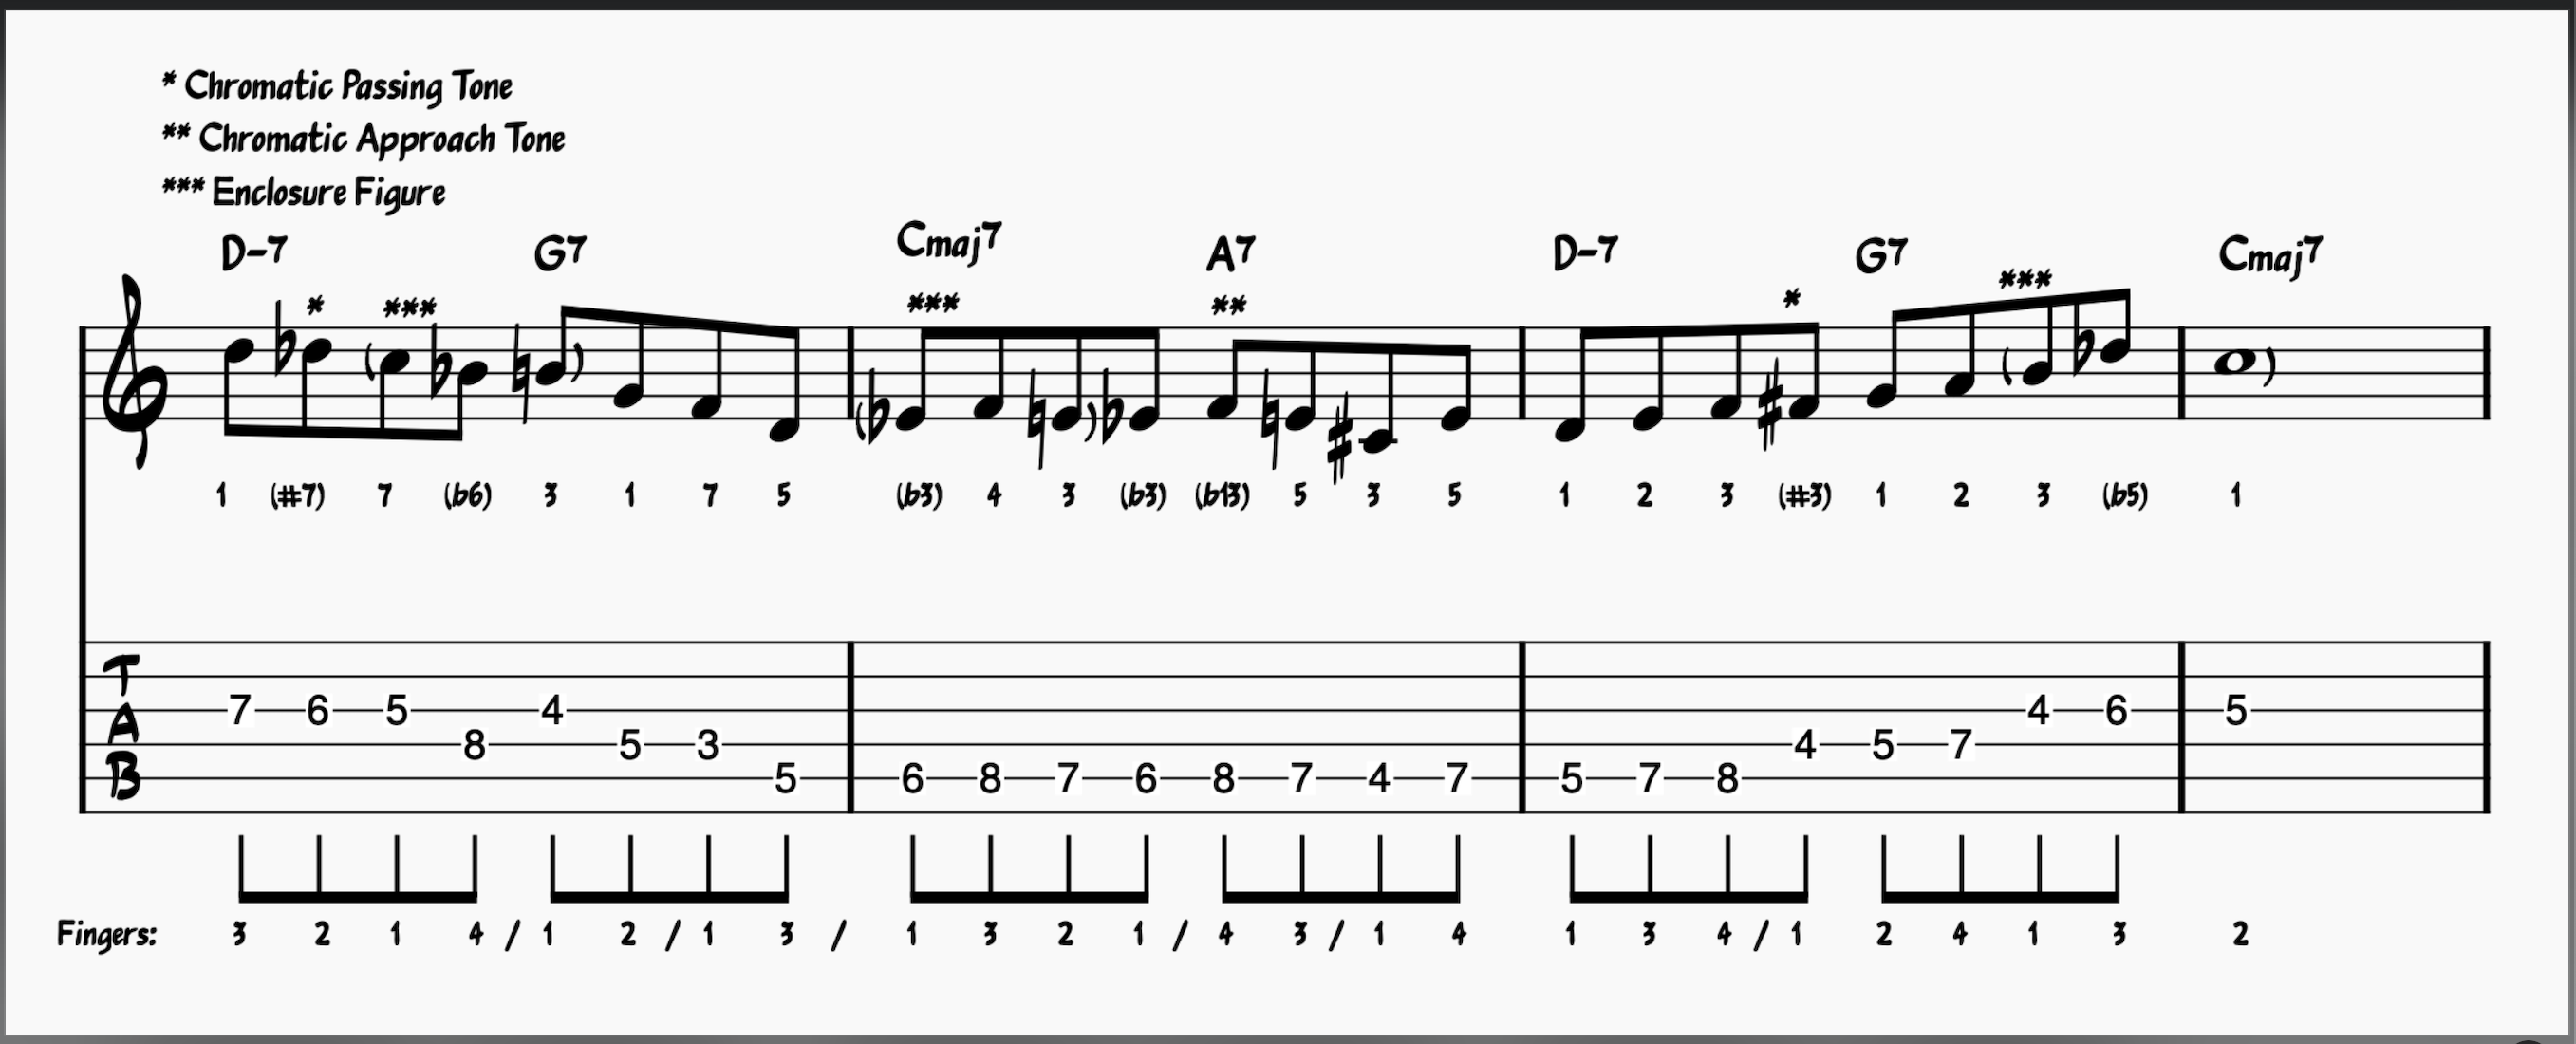 Diatonic Musical Phrase using diatonic notes and bebop language